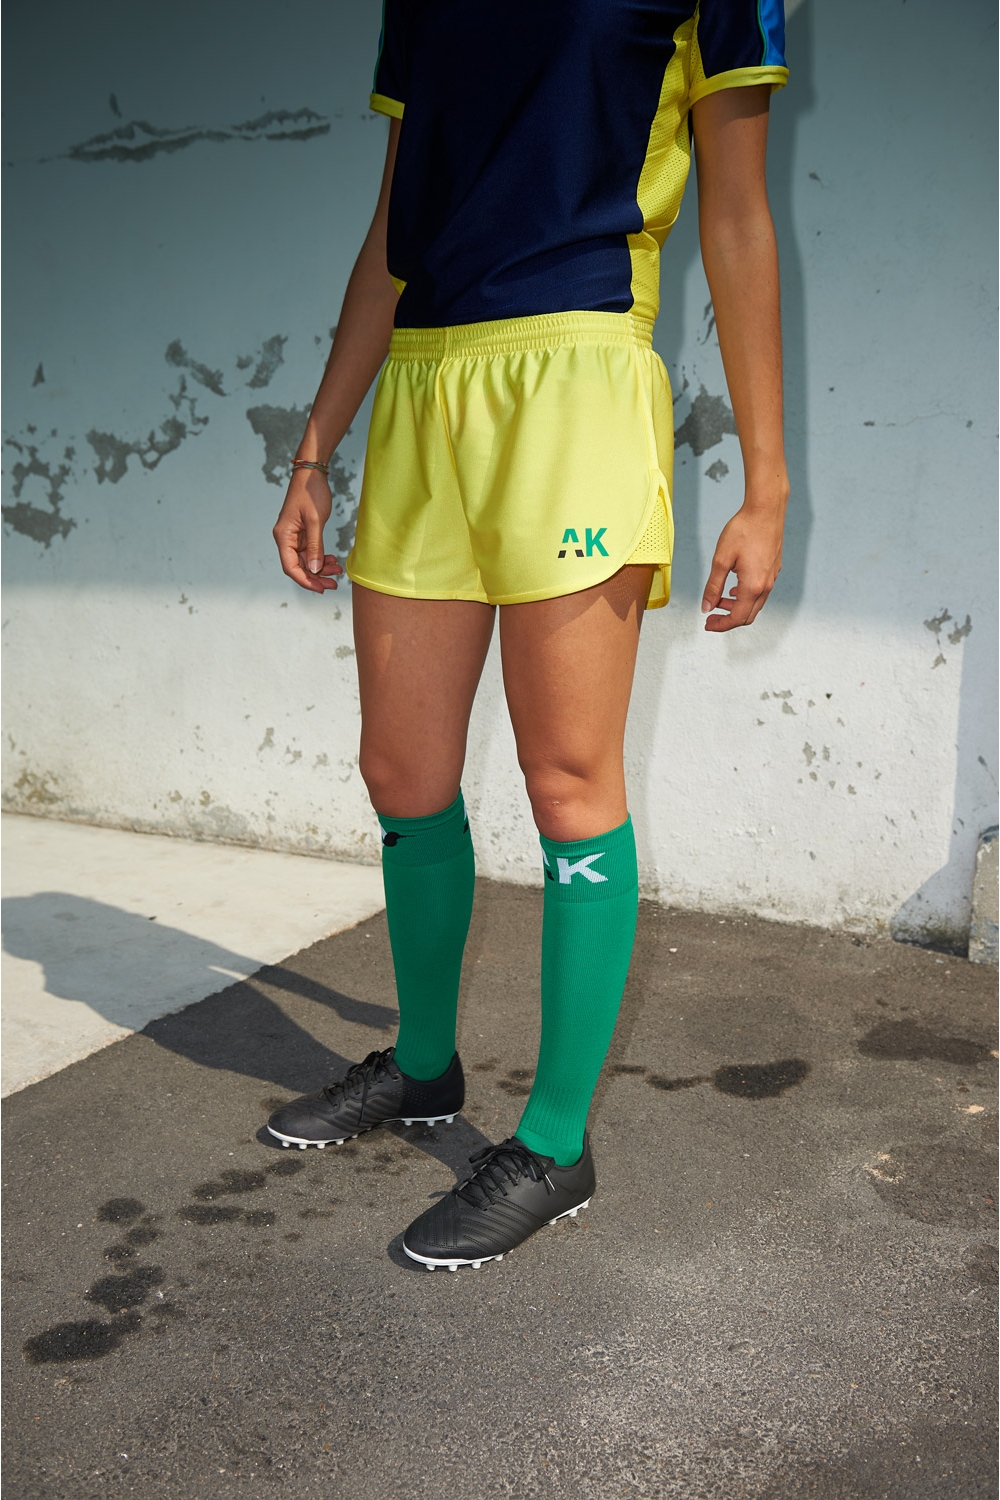 Nettie Primula Short - Yellow - Women's Football - Front view